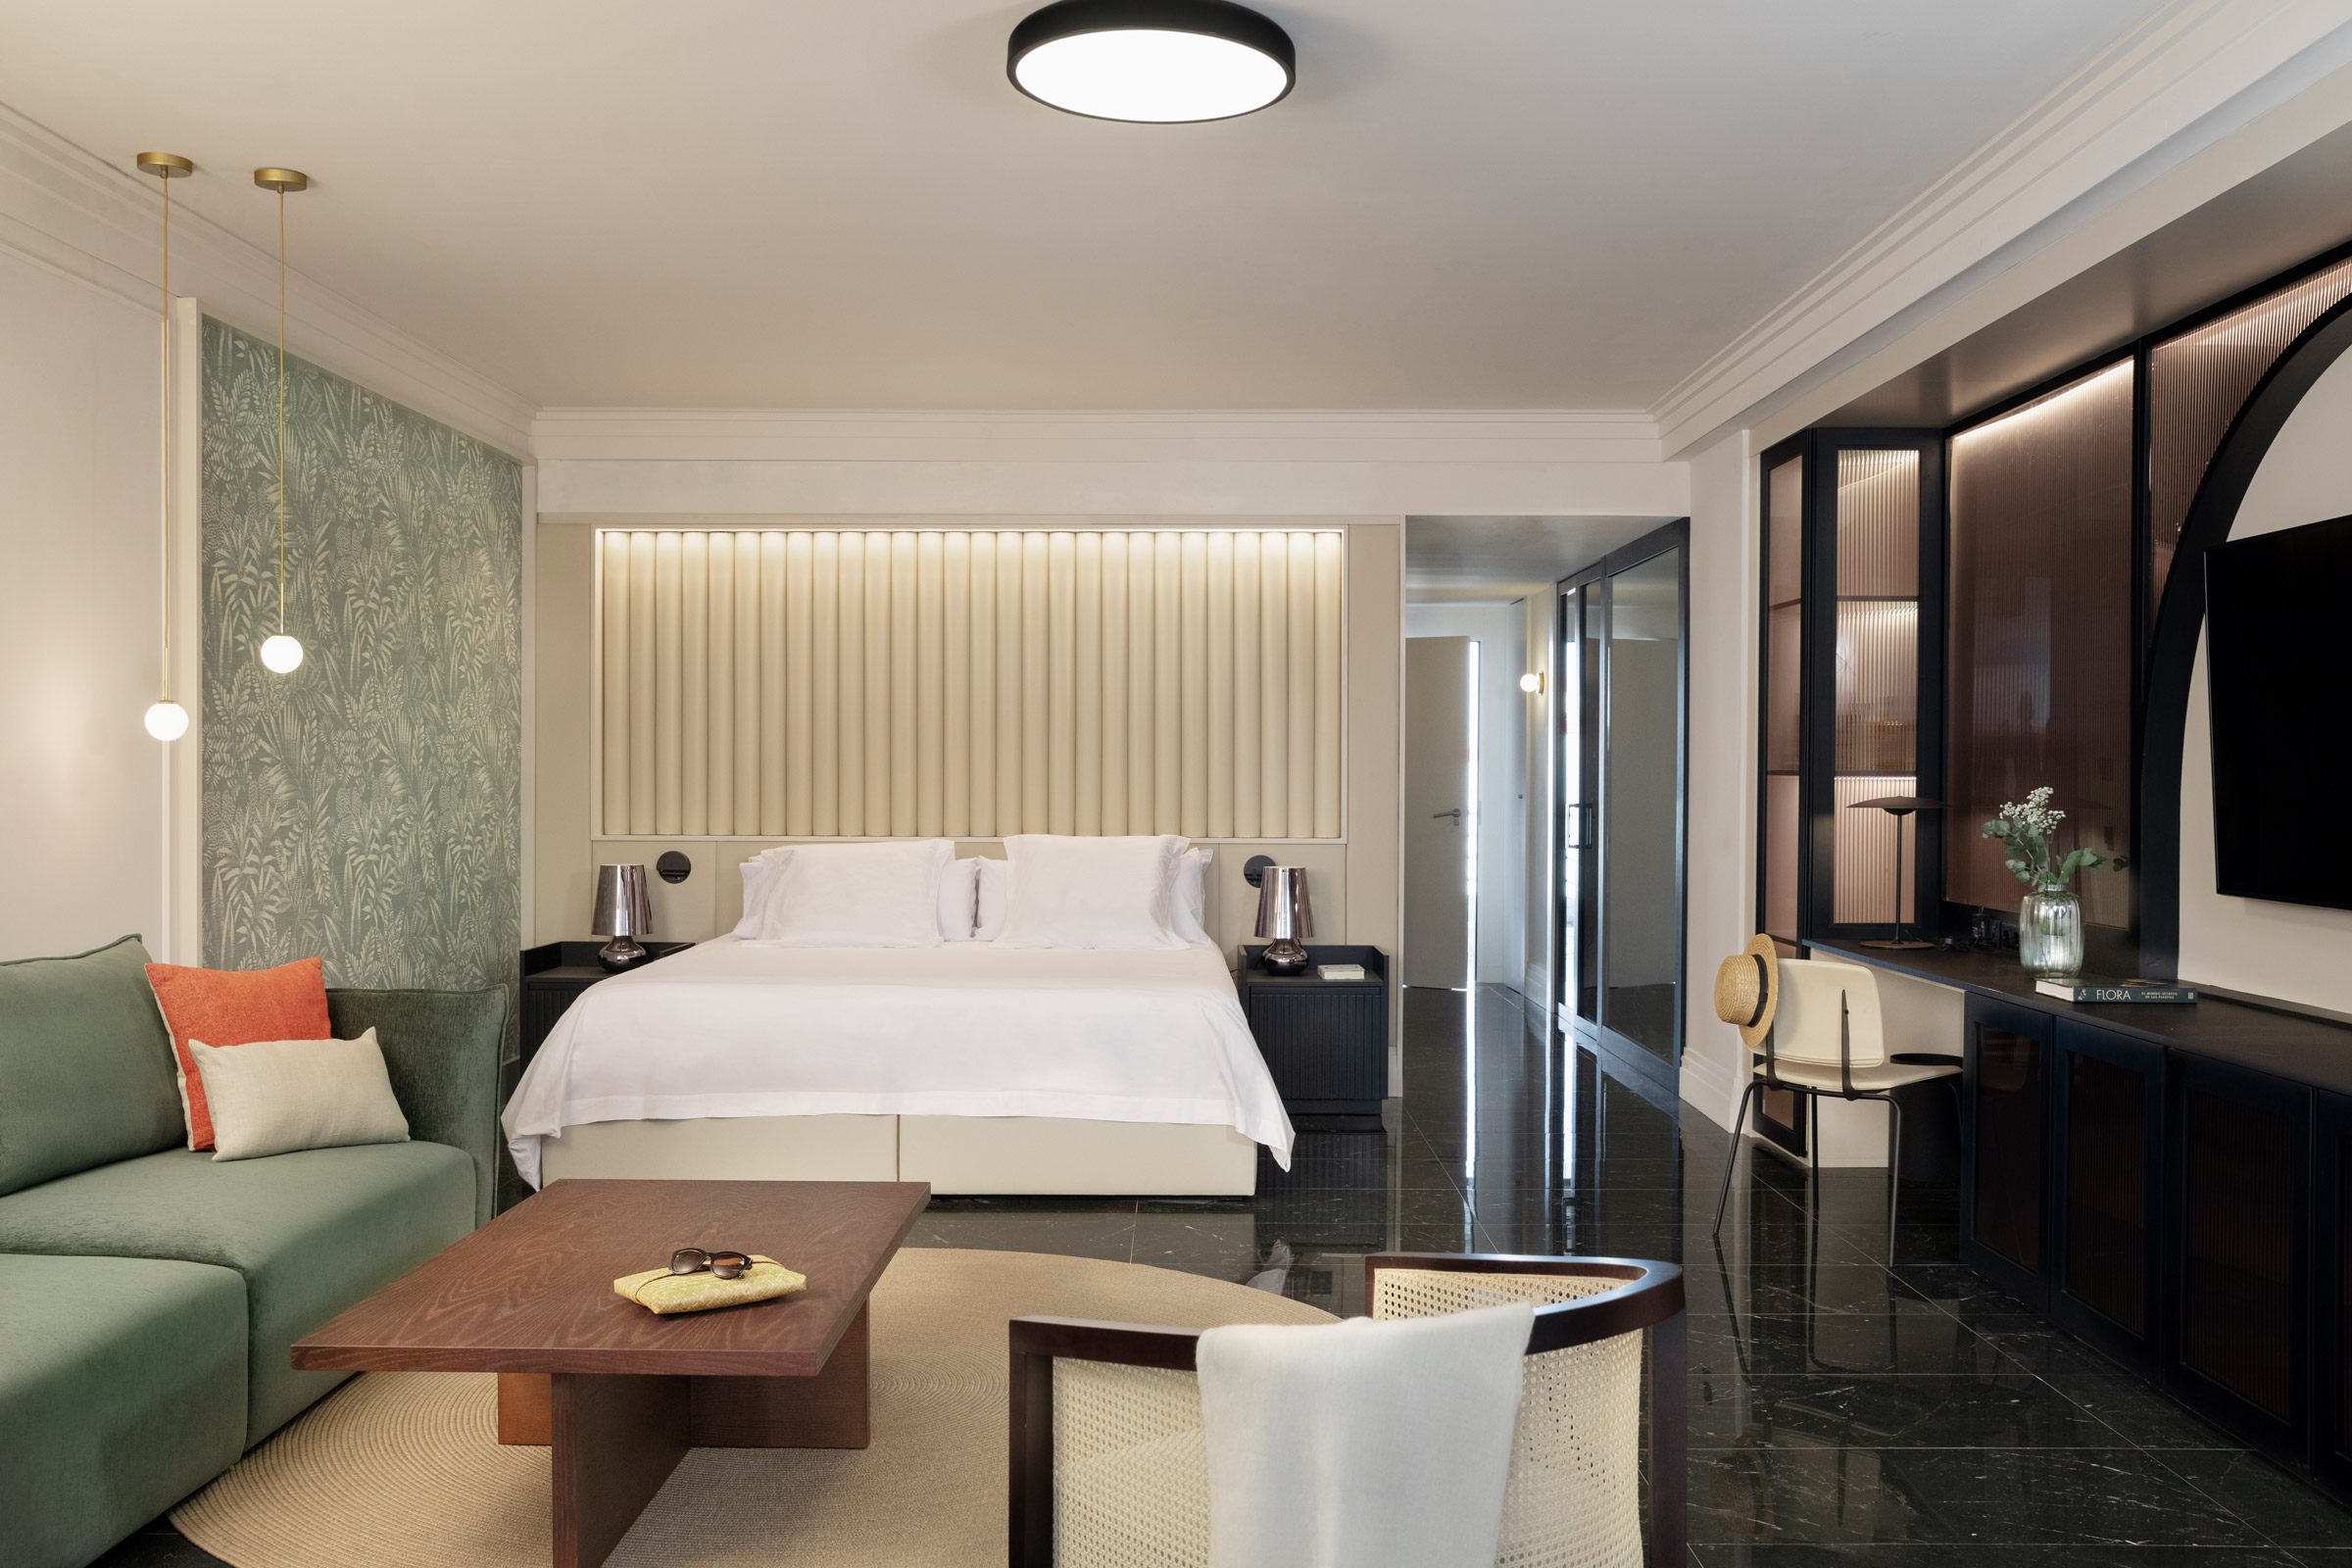 Bedroom space in an All Incluisve resort in Cancun